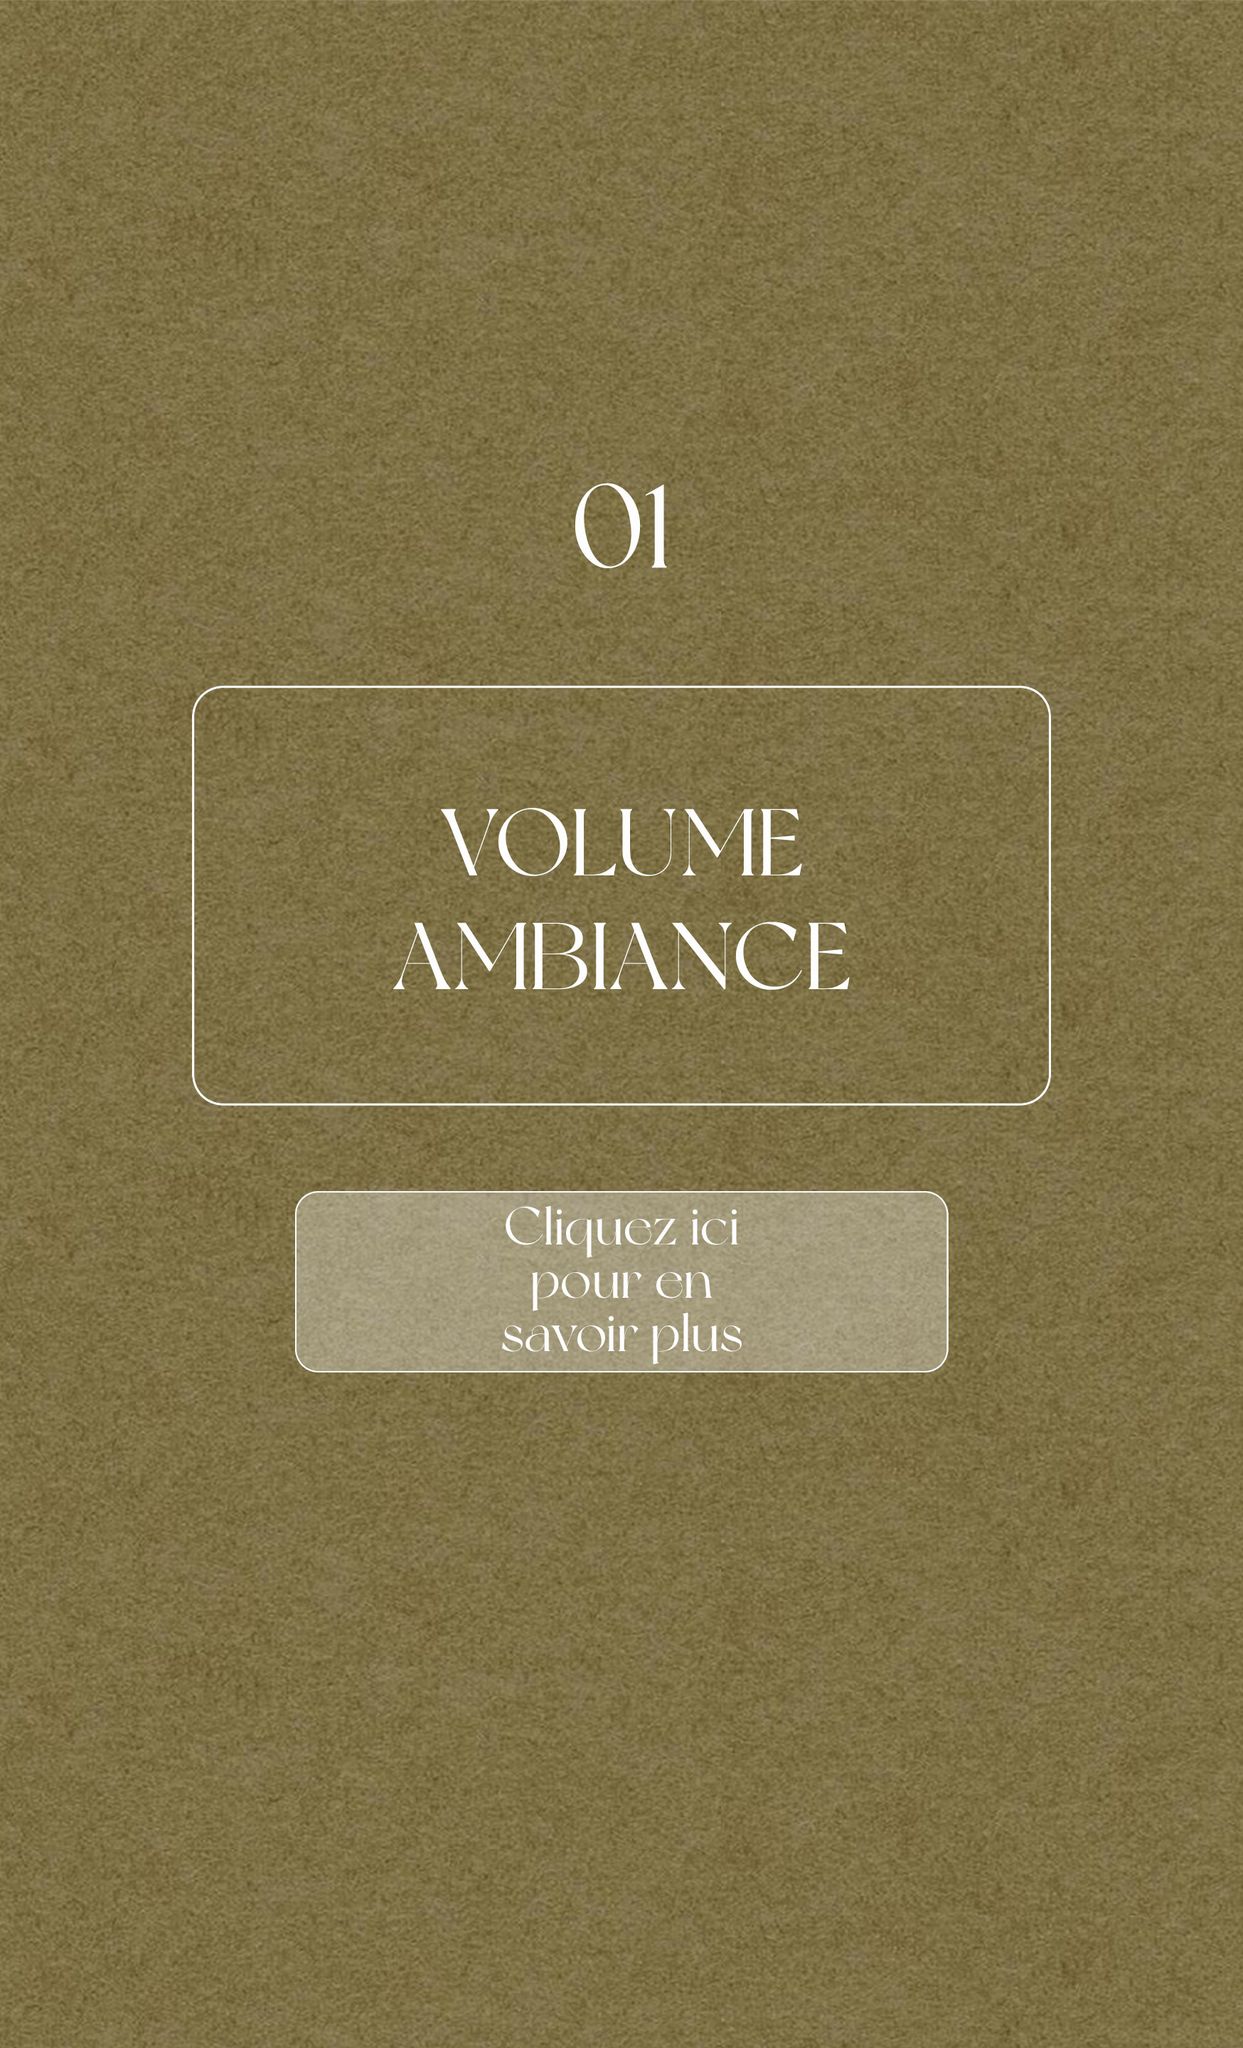 volume-ambiance---click.jpg